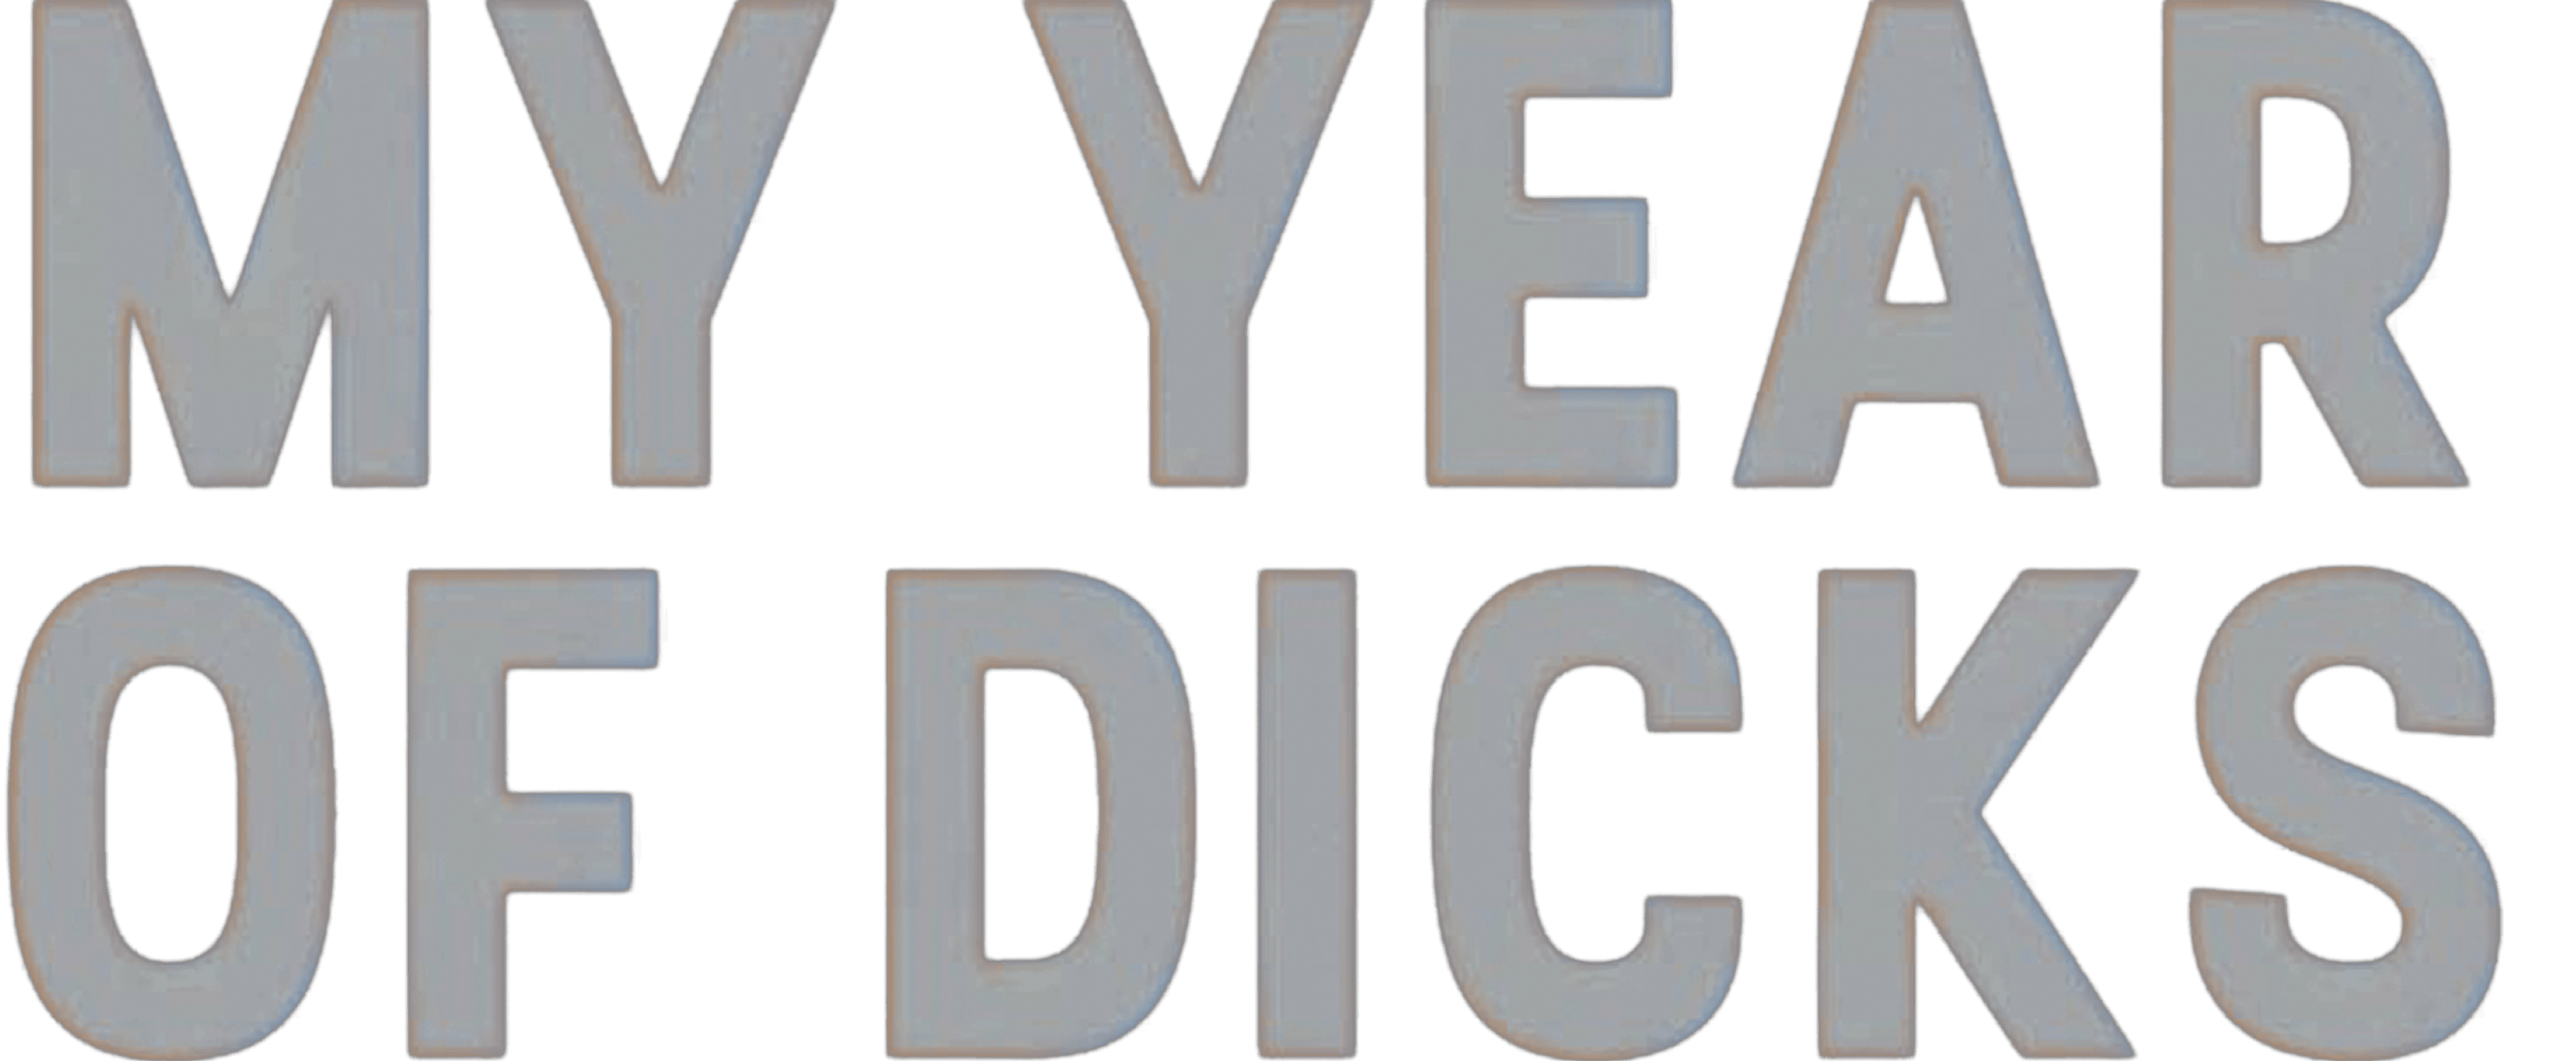 My Year of Dicks logo